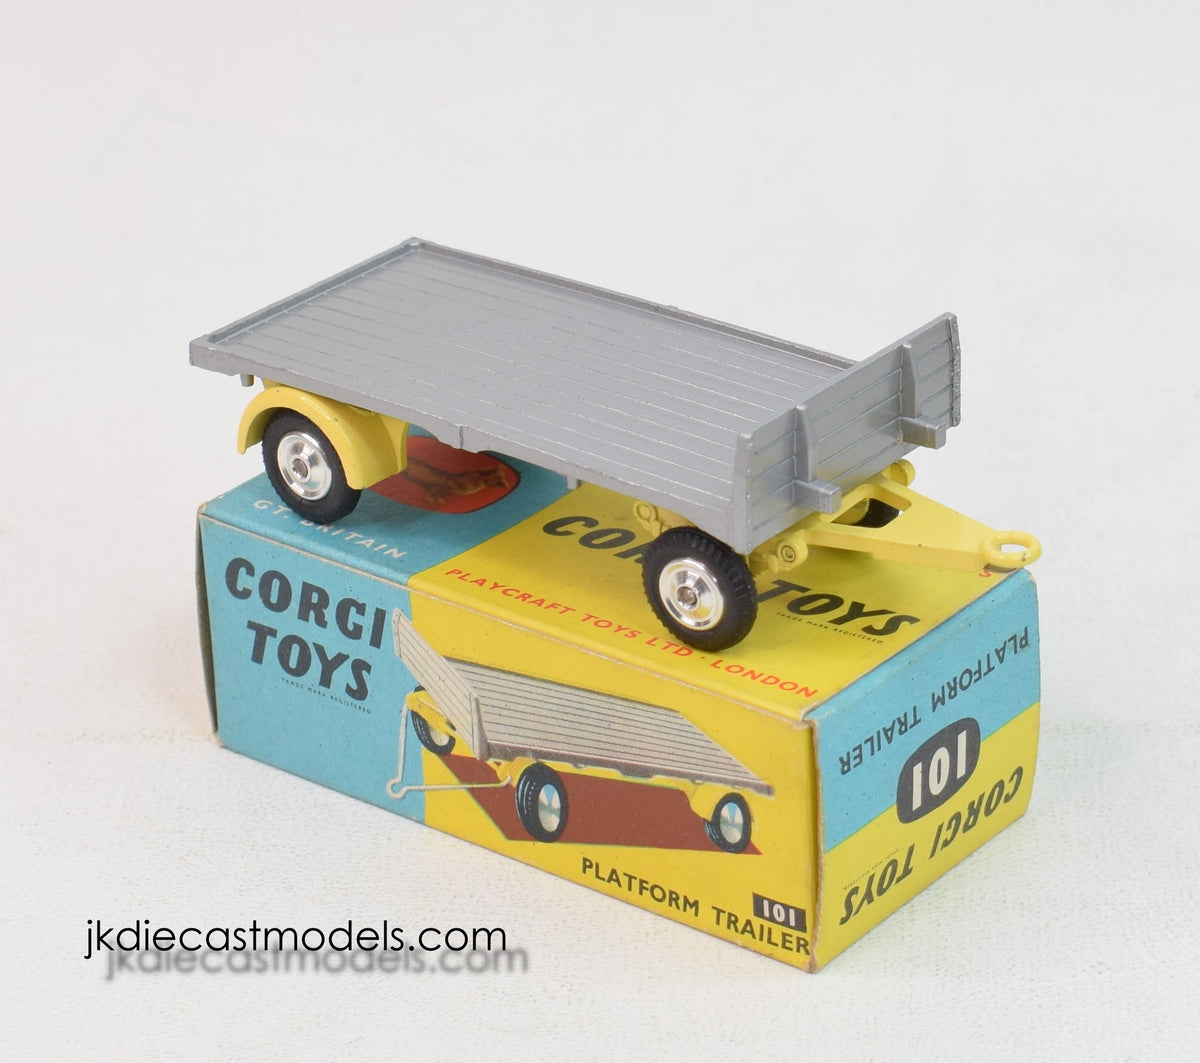 Corgi toys 101 Platform Trailer Virtually Mint/Boxed